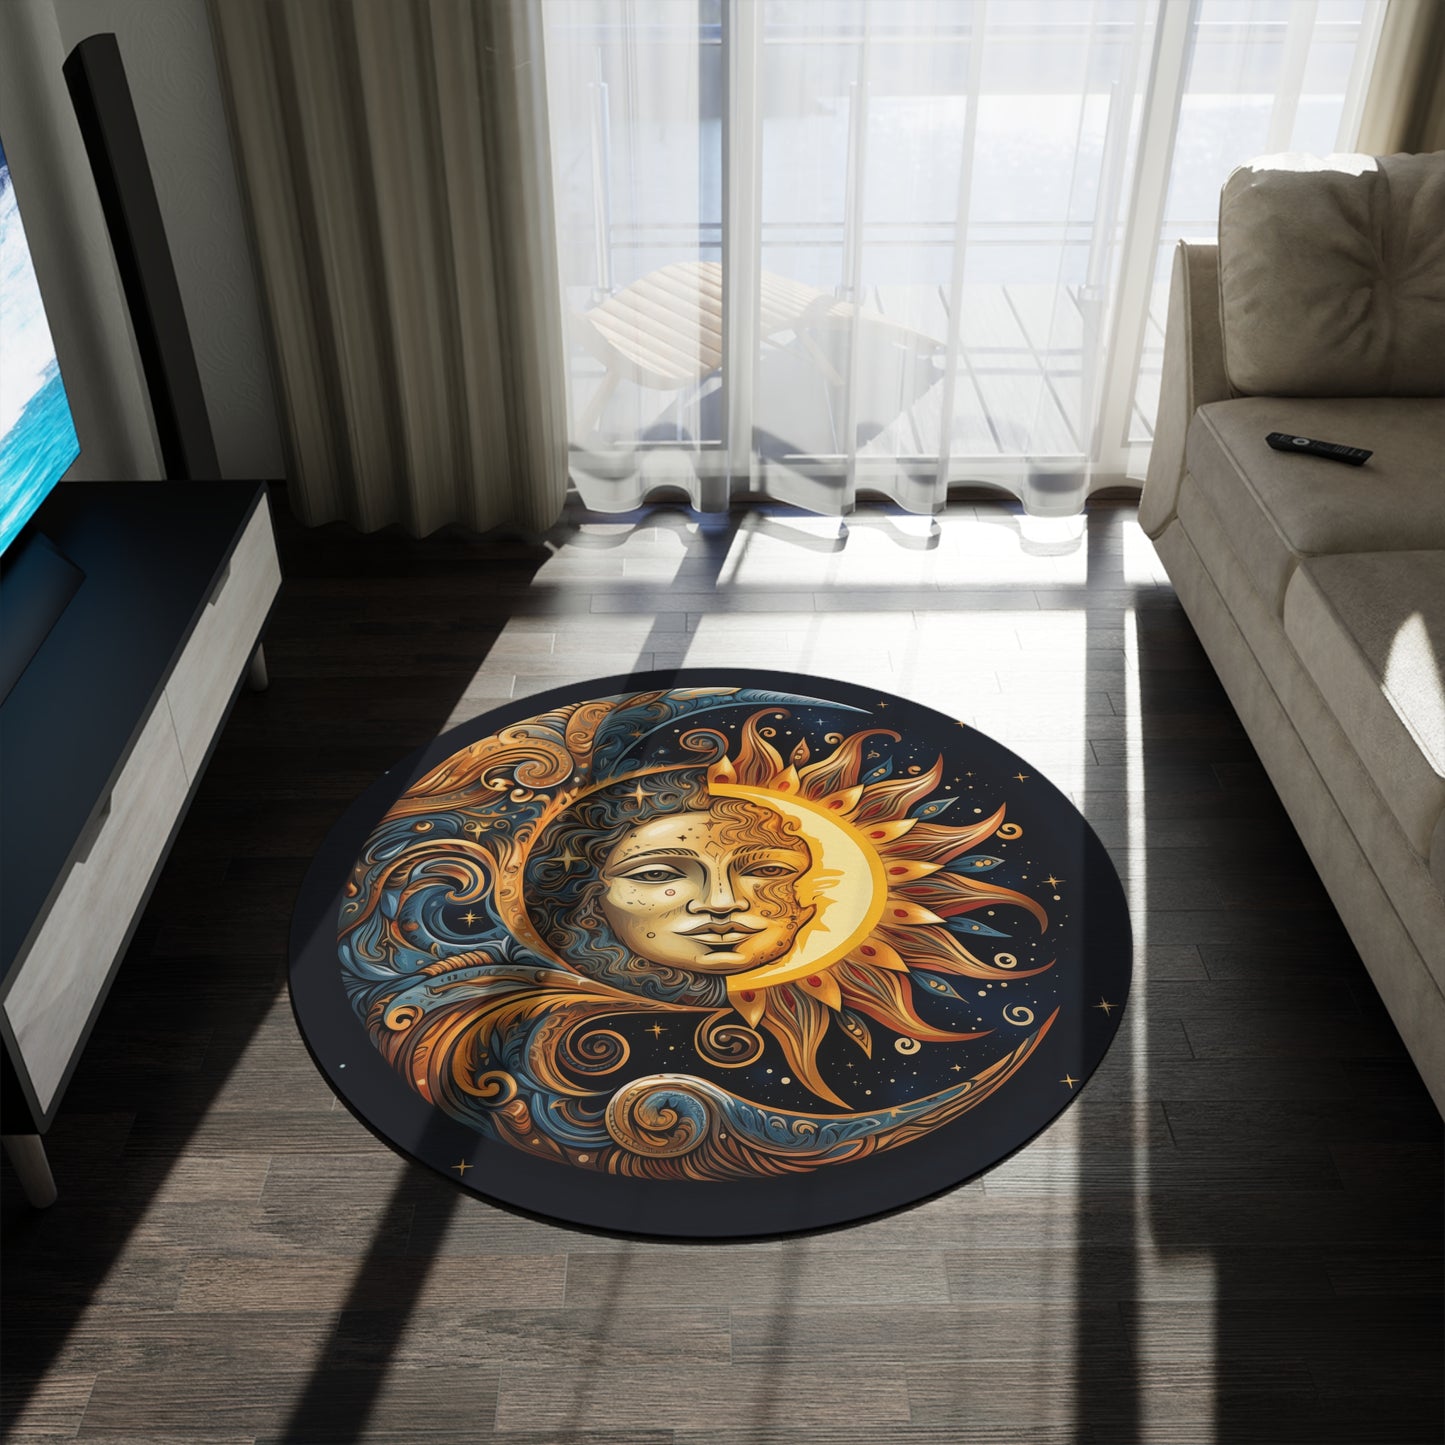 Sun Moon Face Round Area Rug Carpet, Celestial Witchy Circle Home Floor Decor Chic Designer Kids Nursery Accent Decorative Bedroom Mat